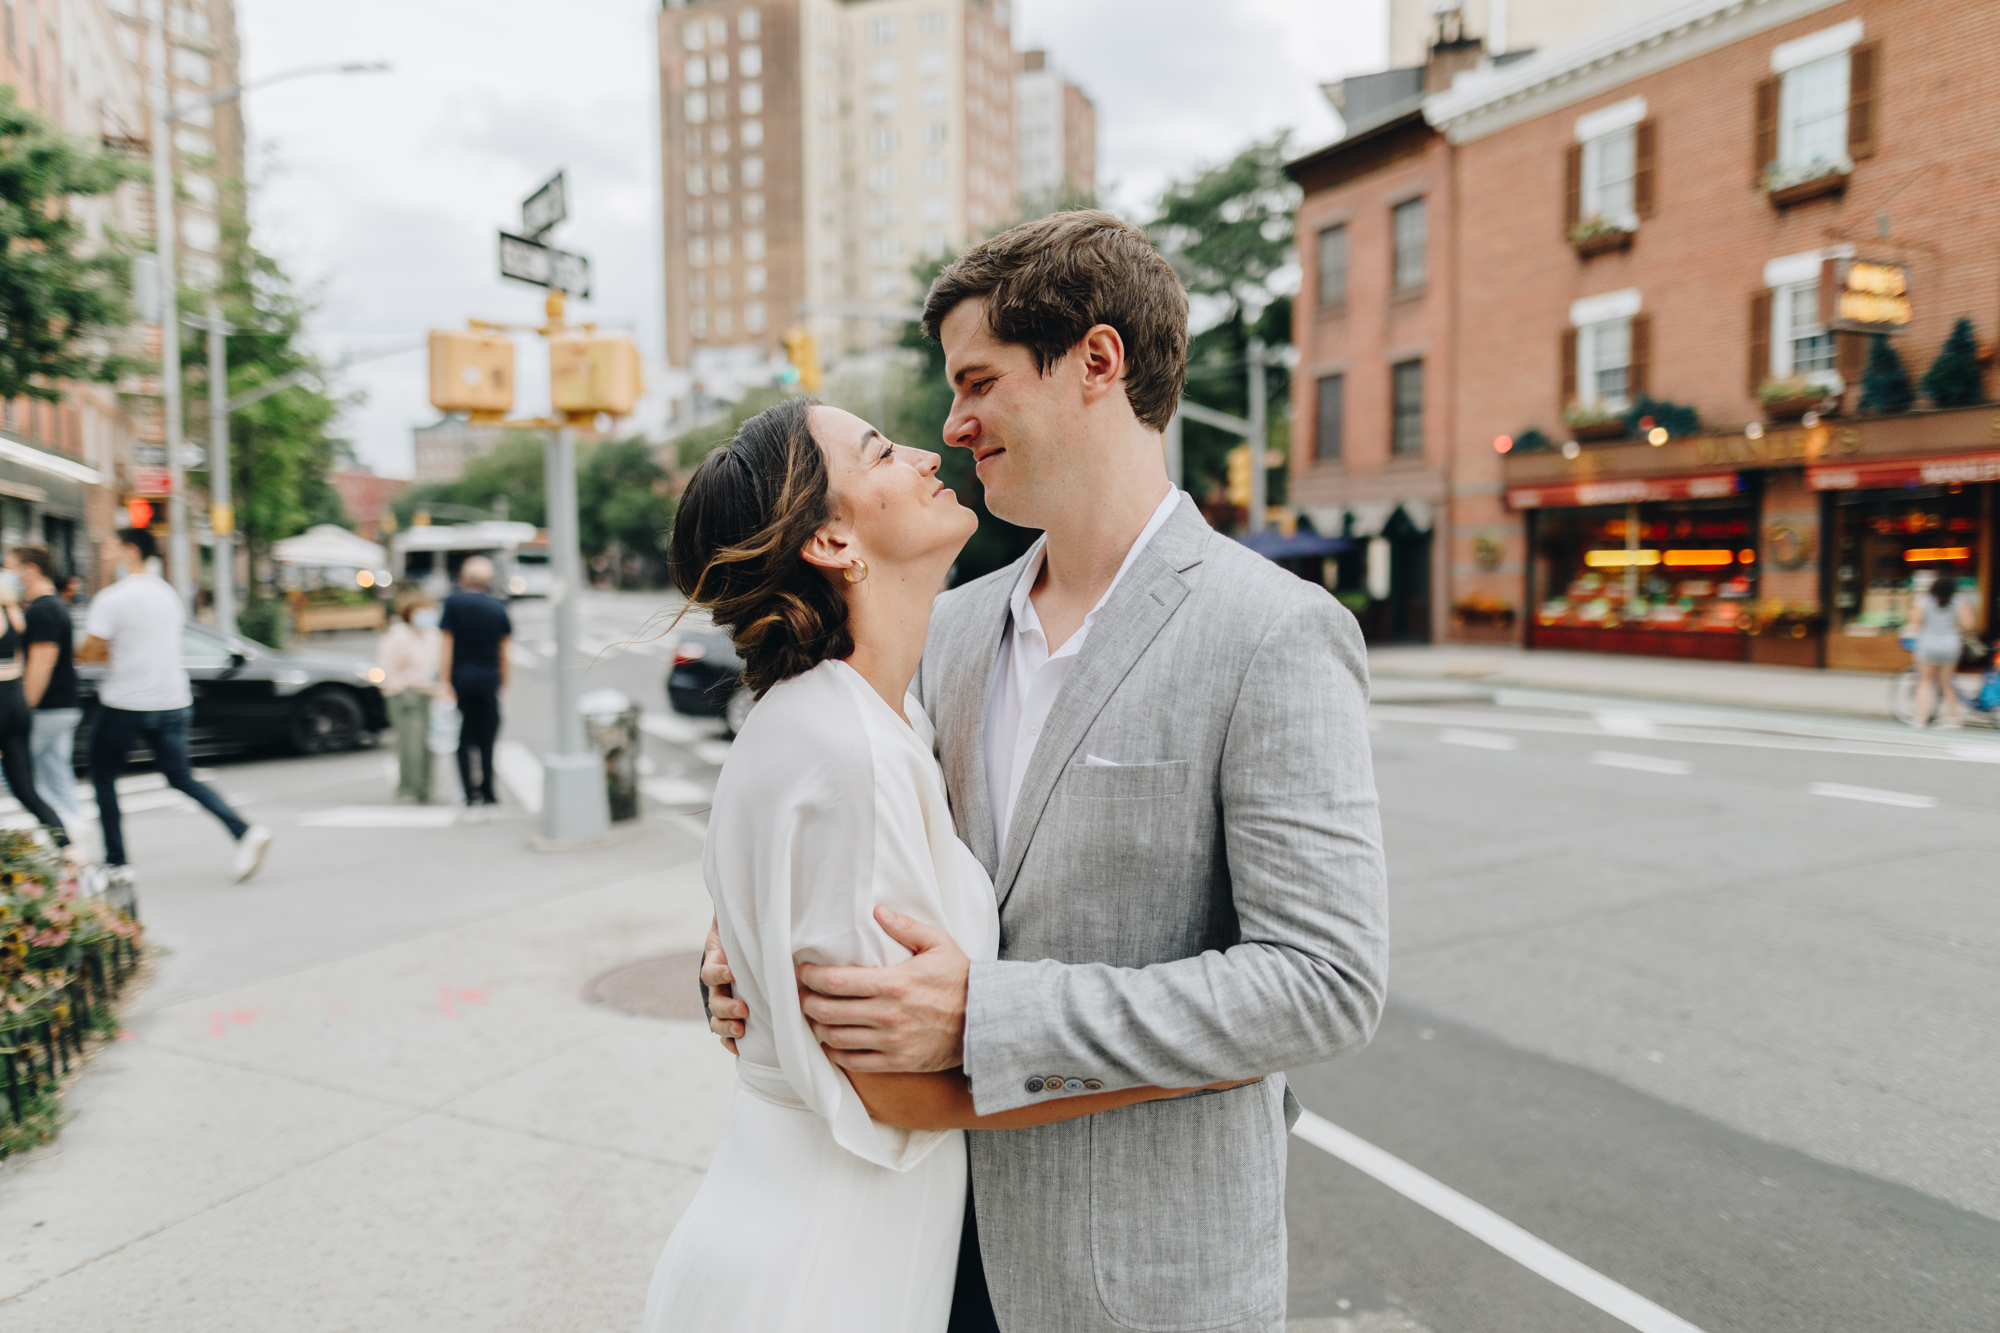 Summertime elopement photos in New York